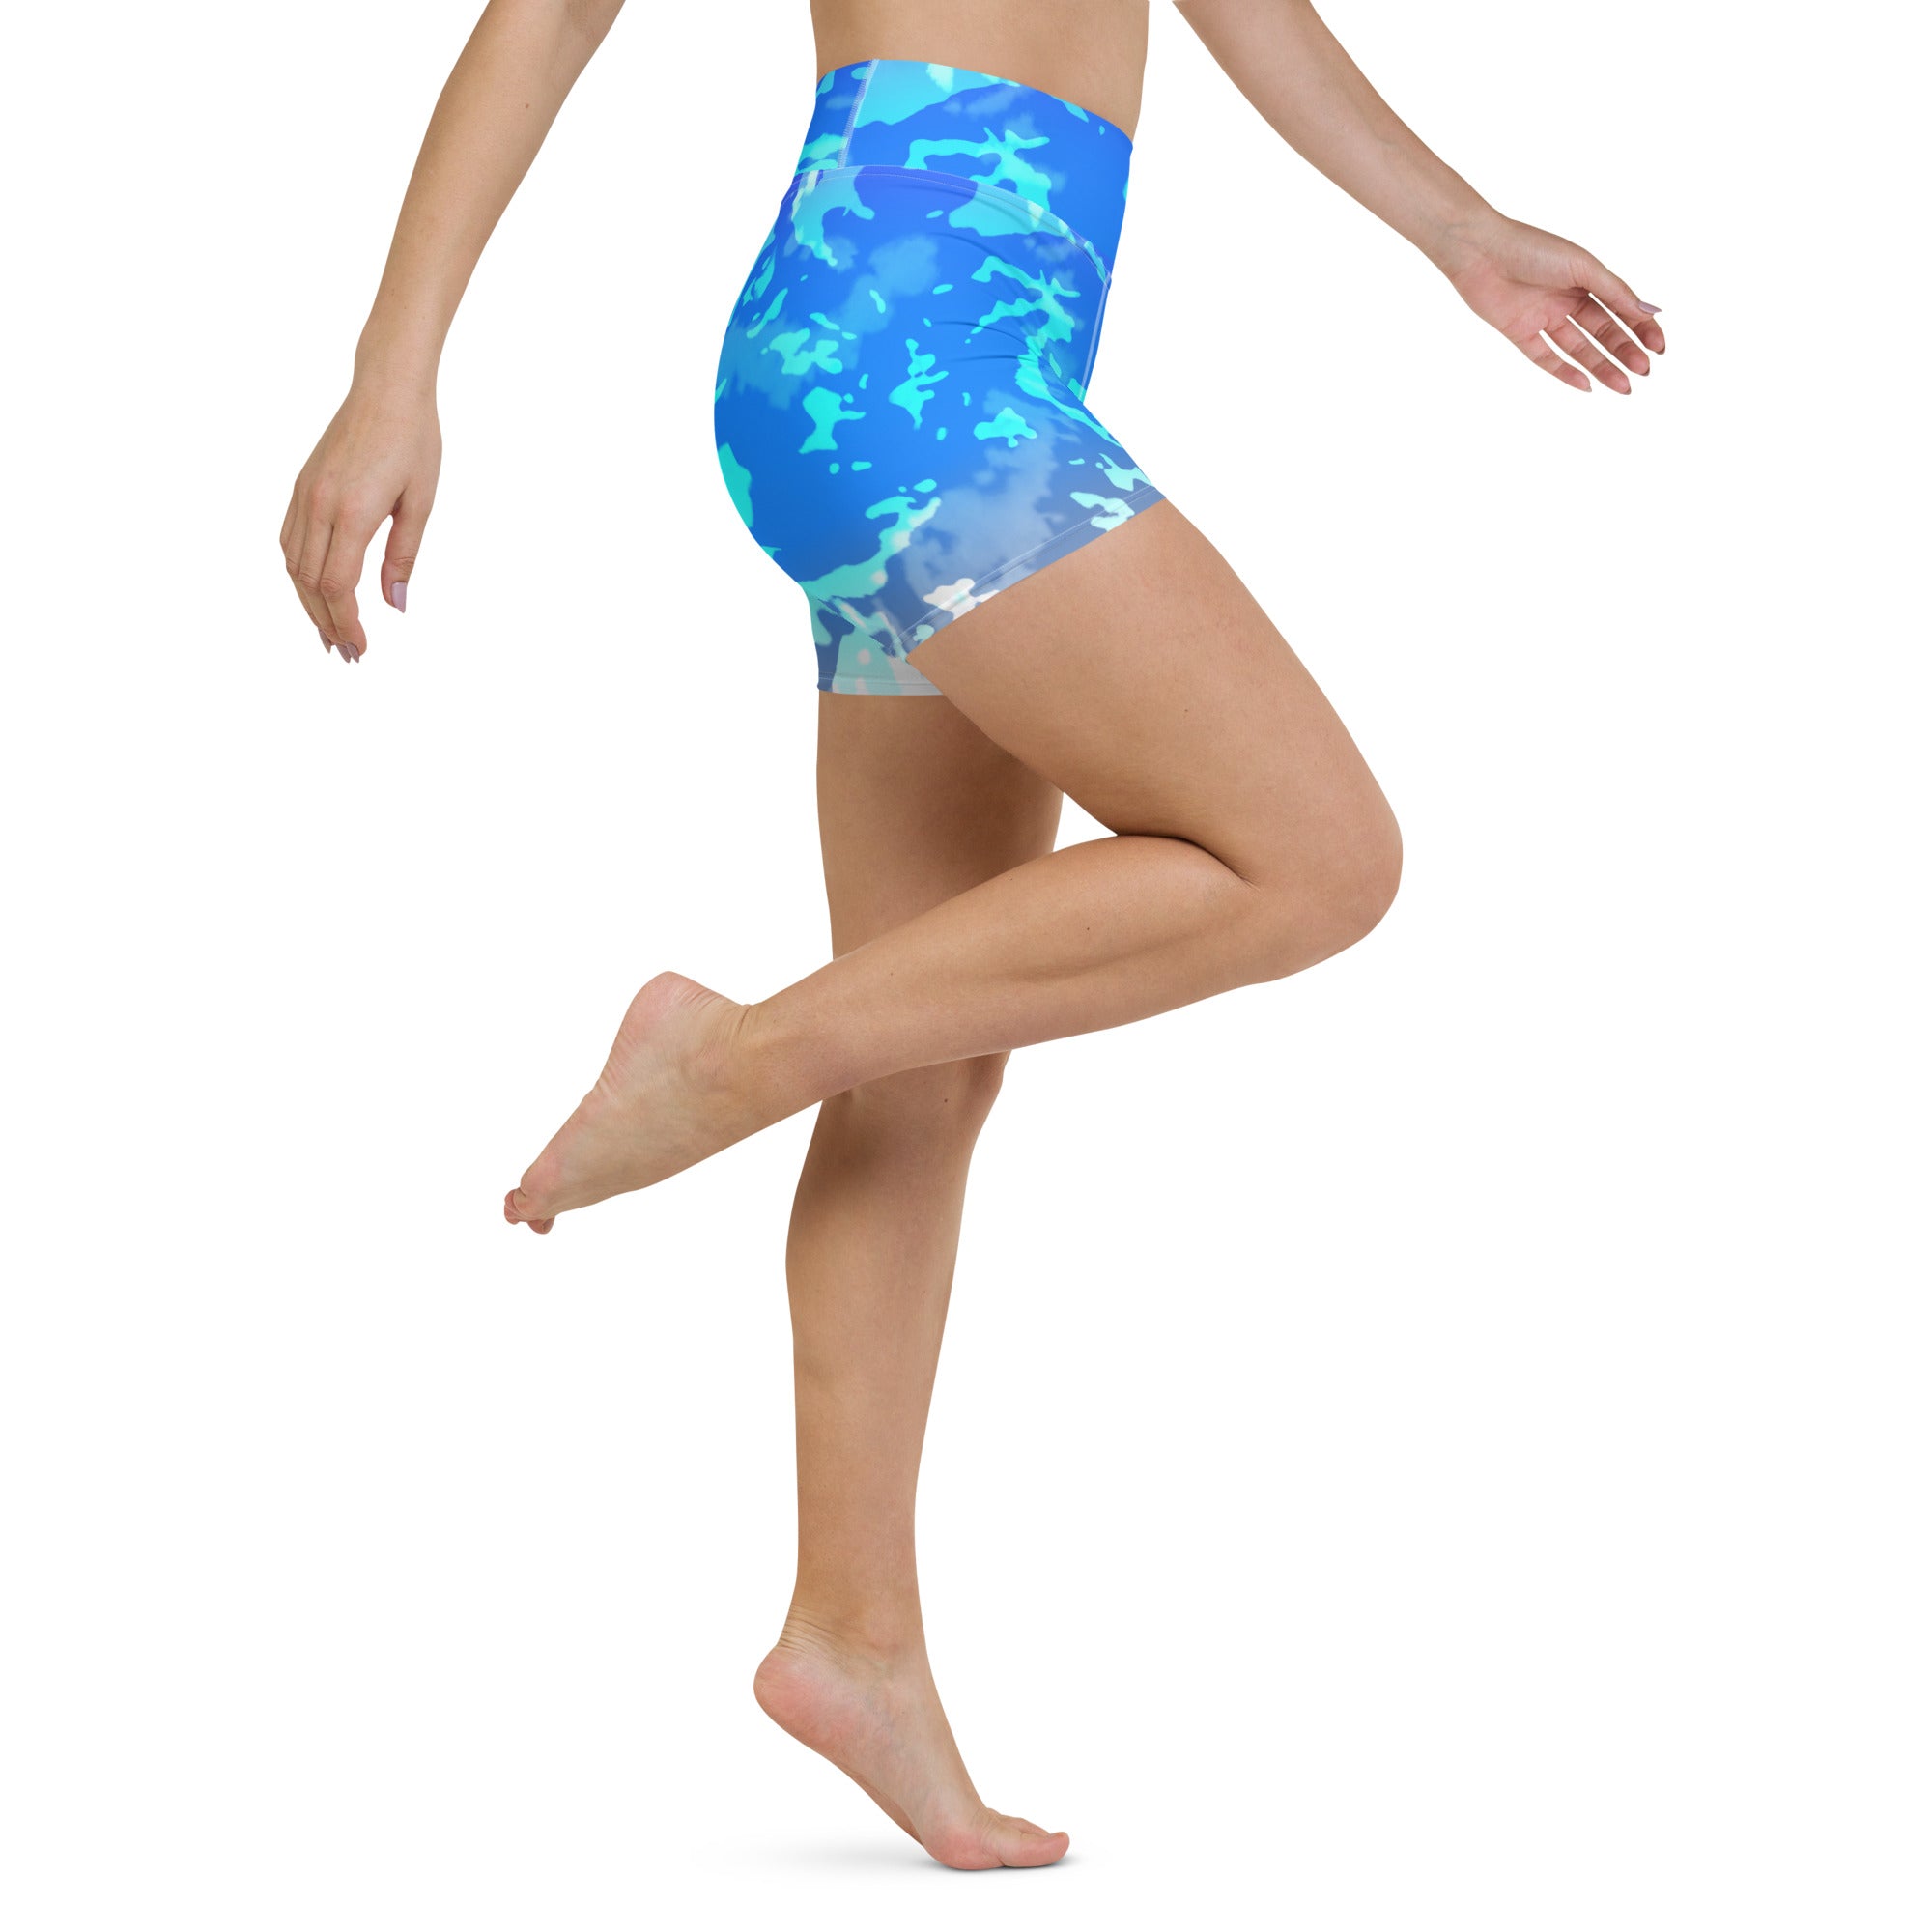 Yoga Shorts- Tie Dye Multicolour Splashes